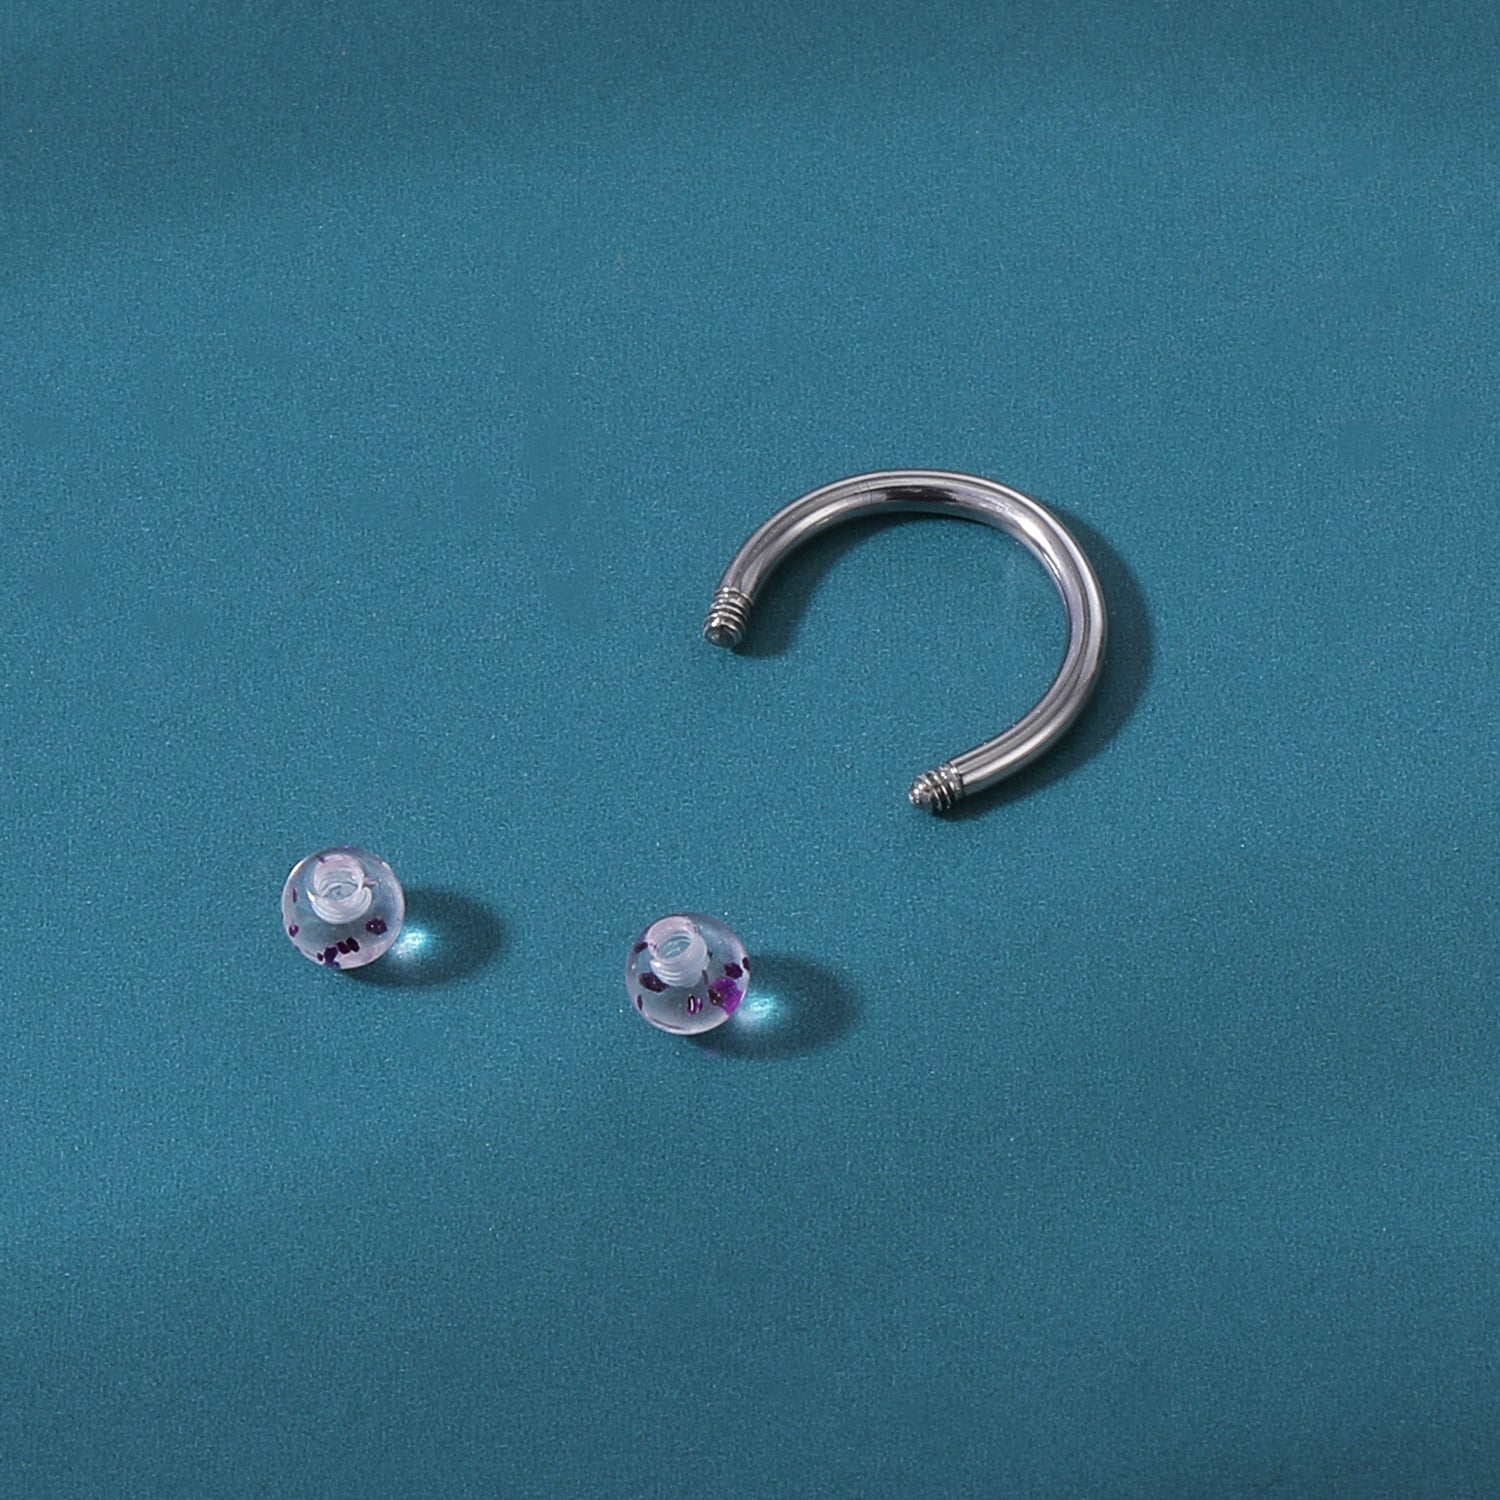 16g-5-colors-acrylic-nose-septum-ring-horse-shoe-helix-cartilage-piercing